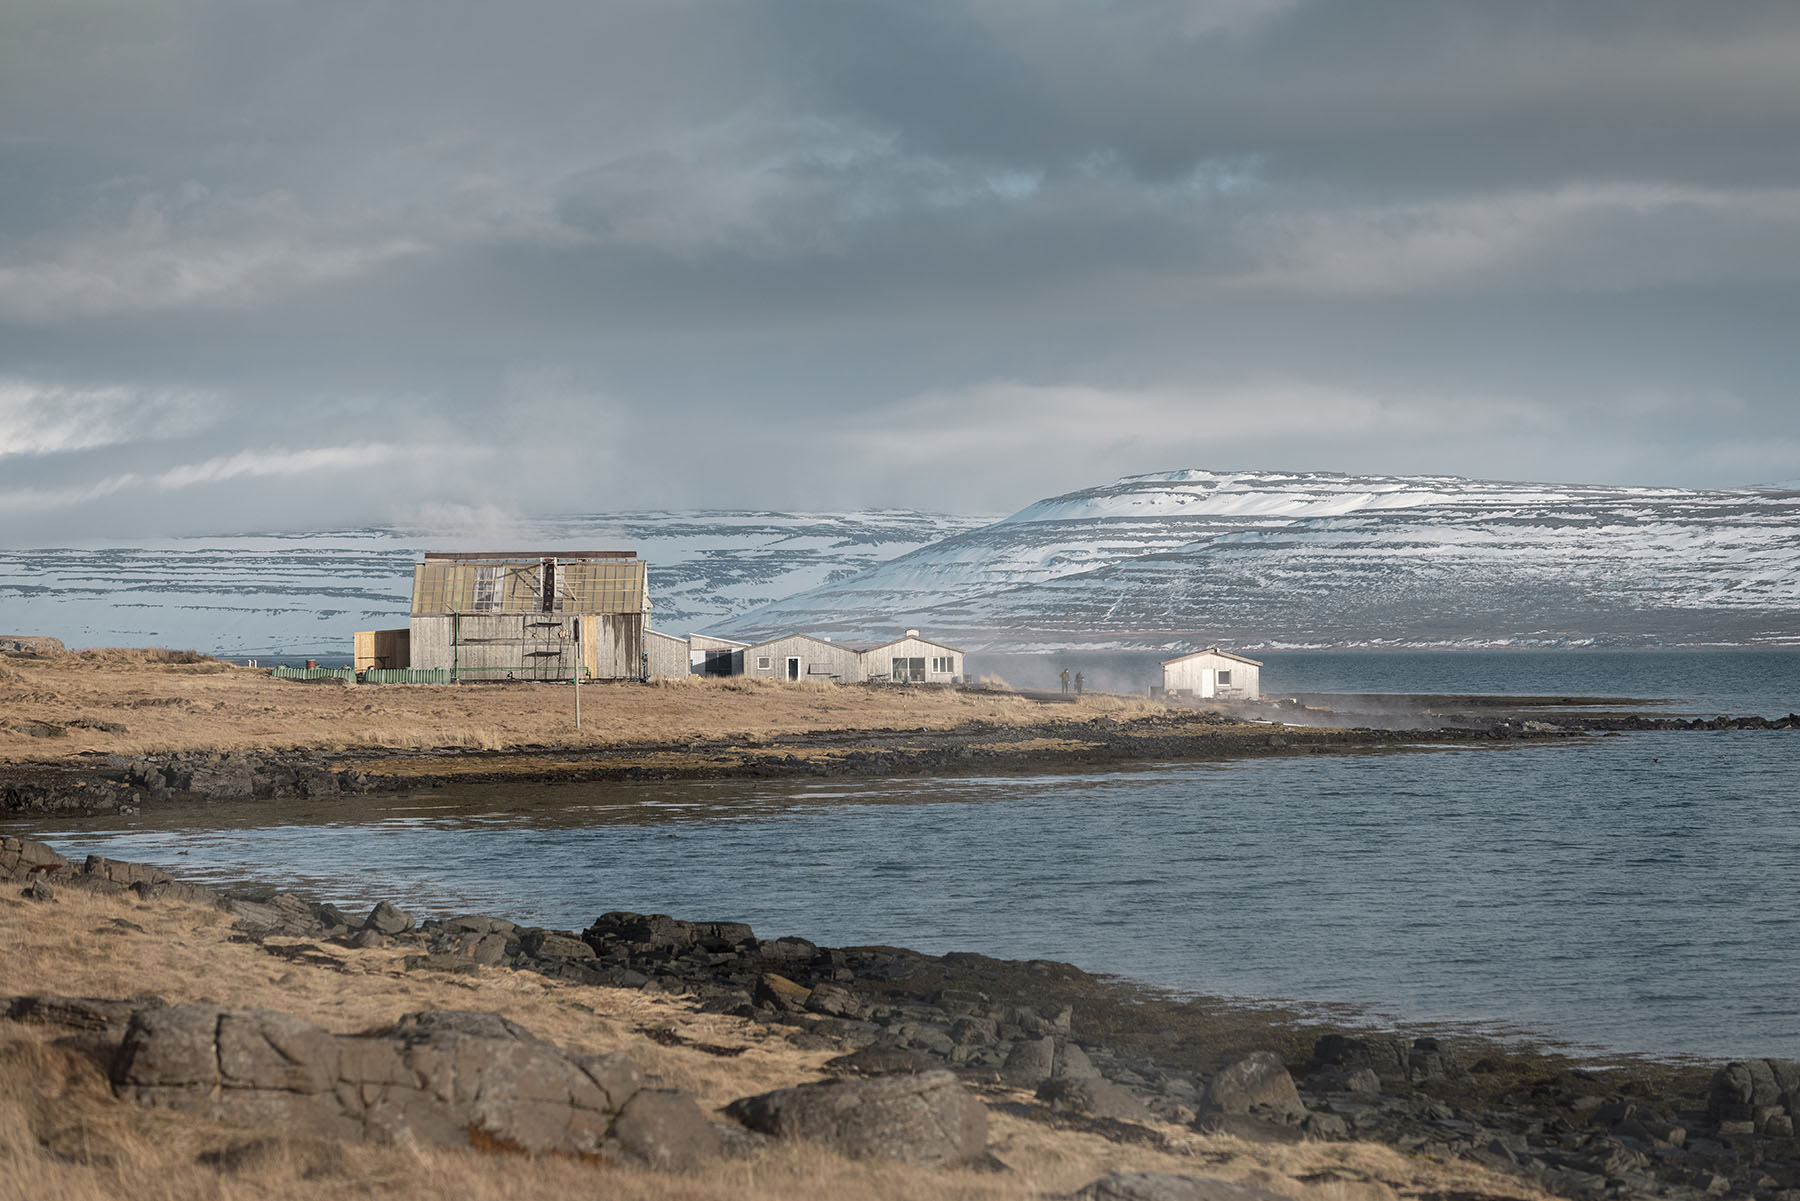 Saltverk's factory in Iceland